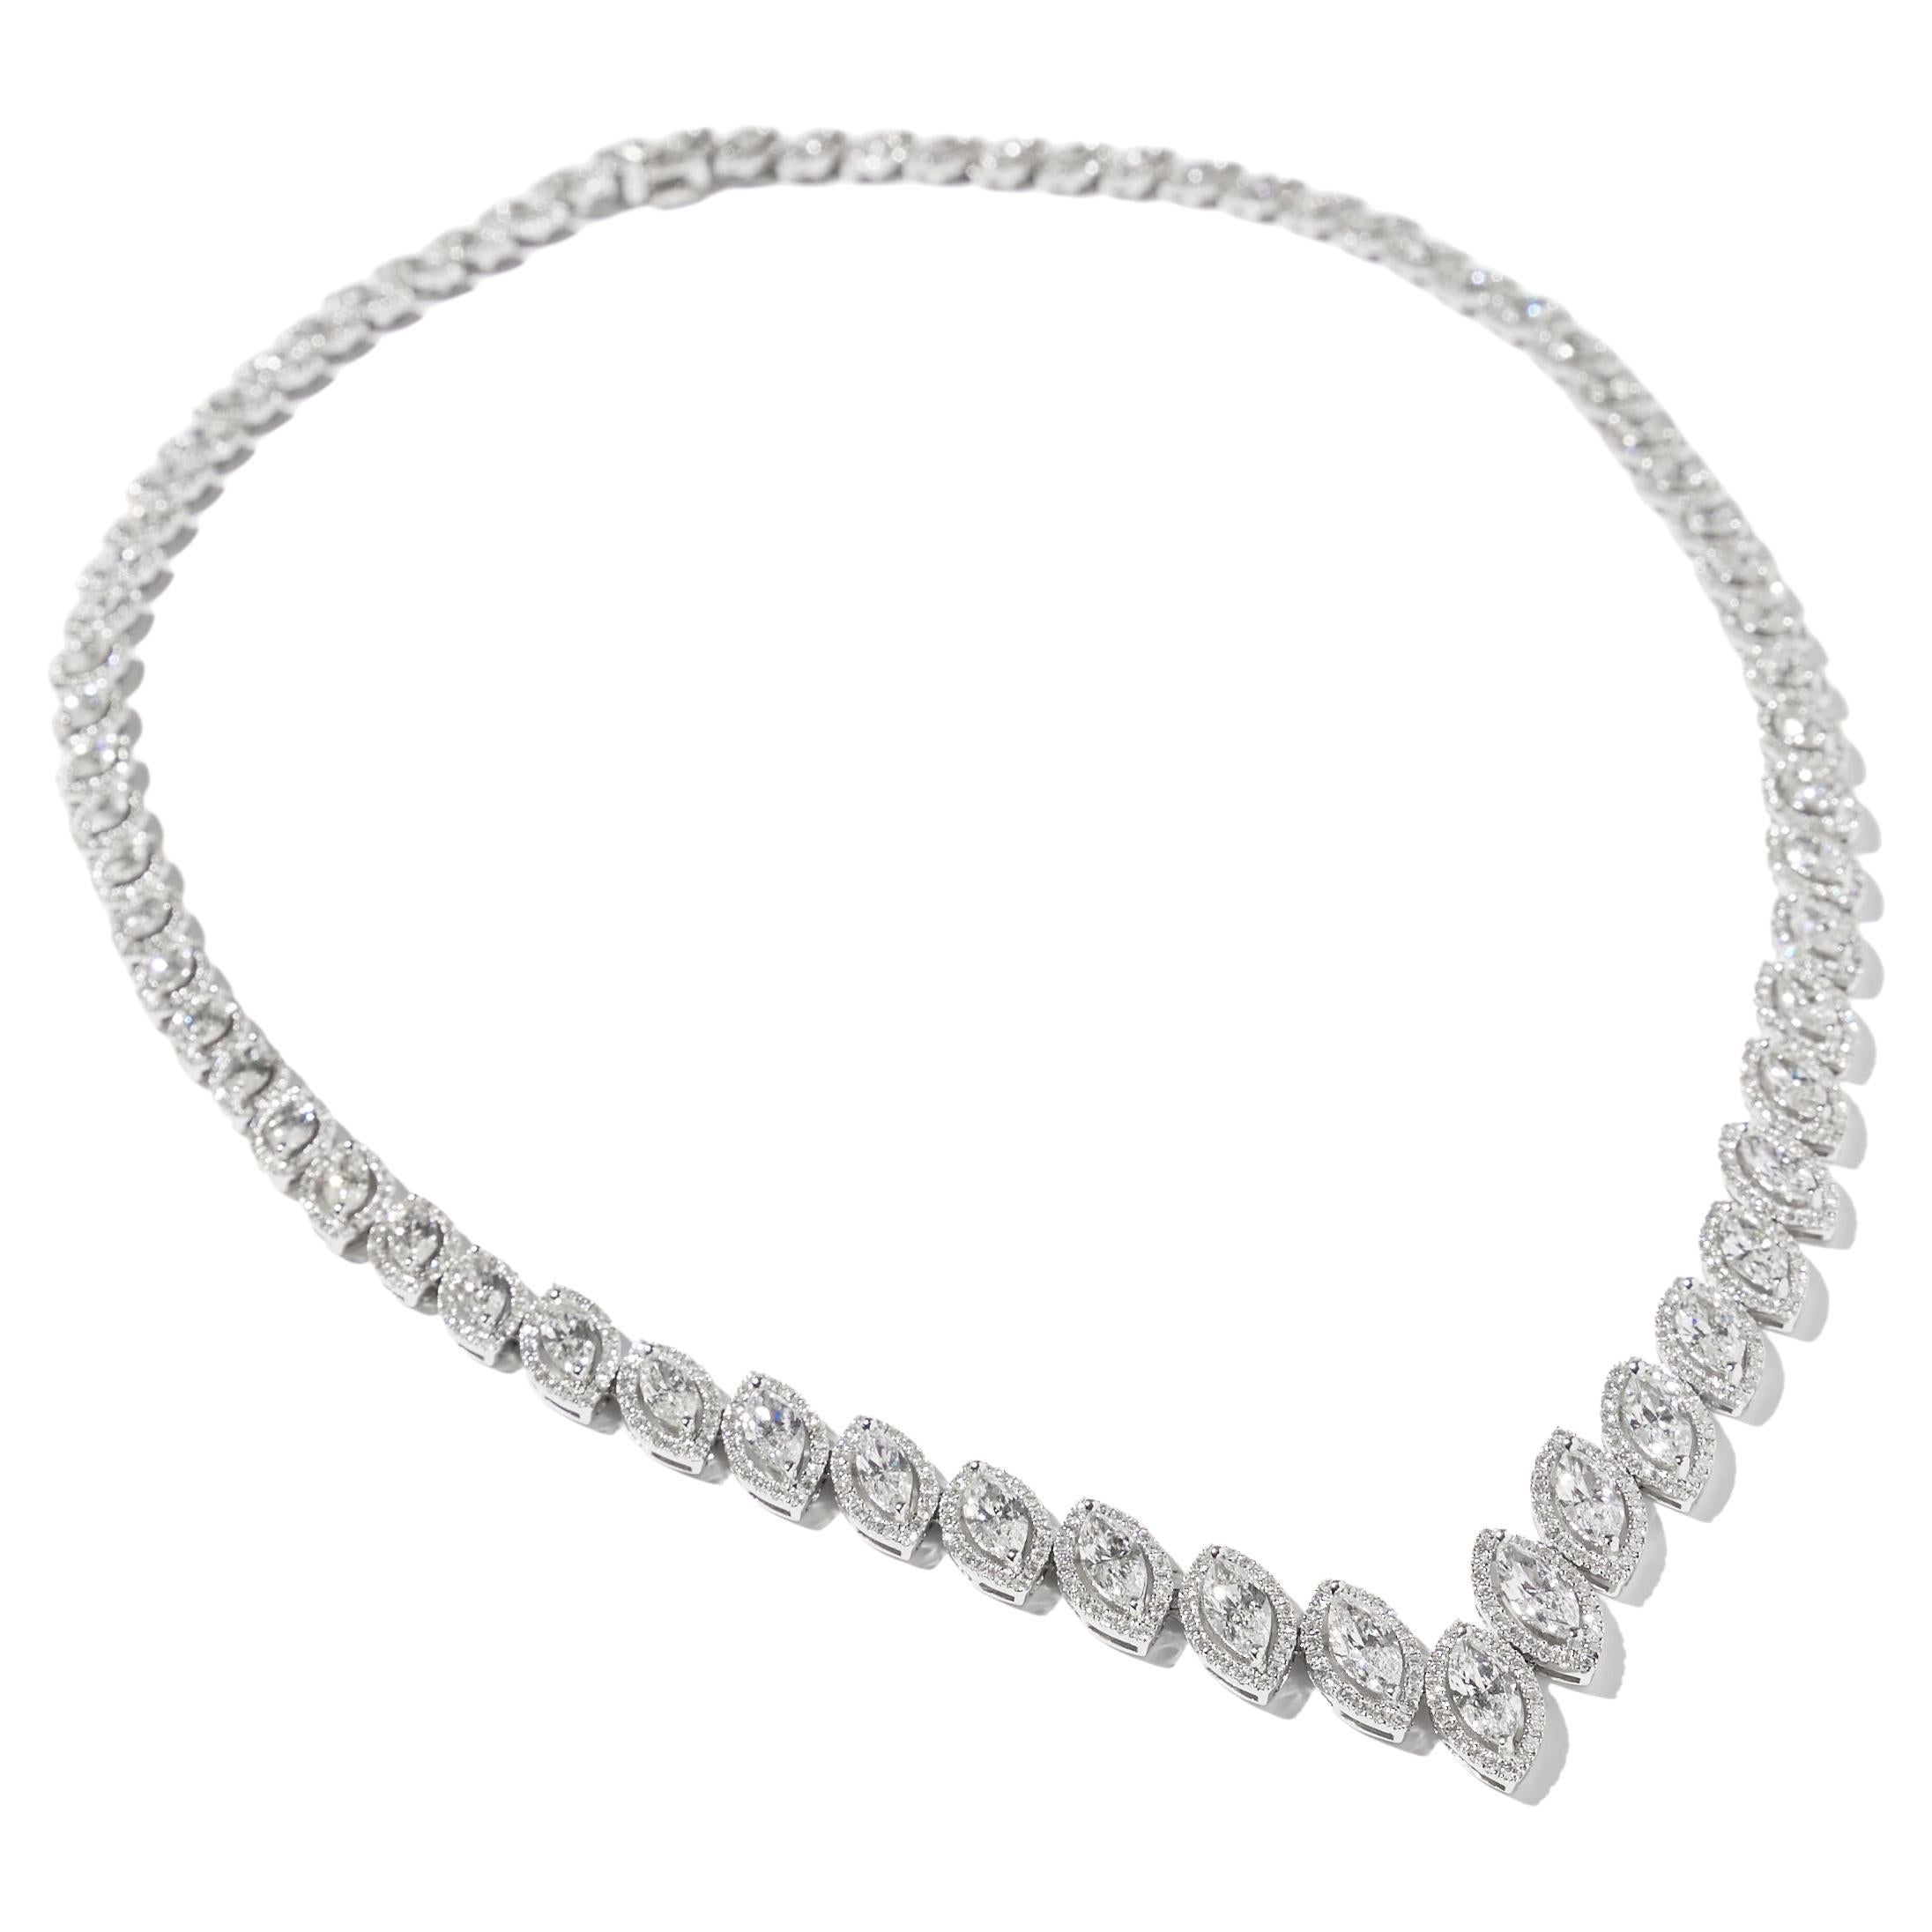 18 karat white gold marquise cut diamond necklace 15.22 carats